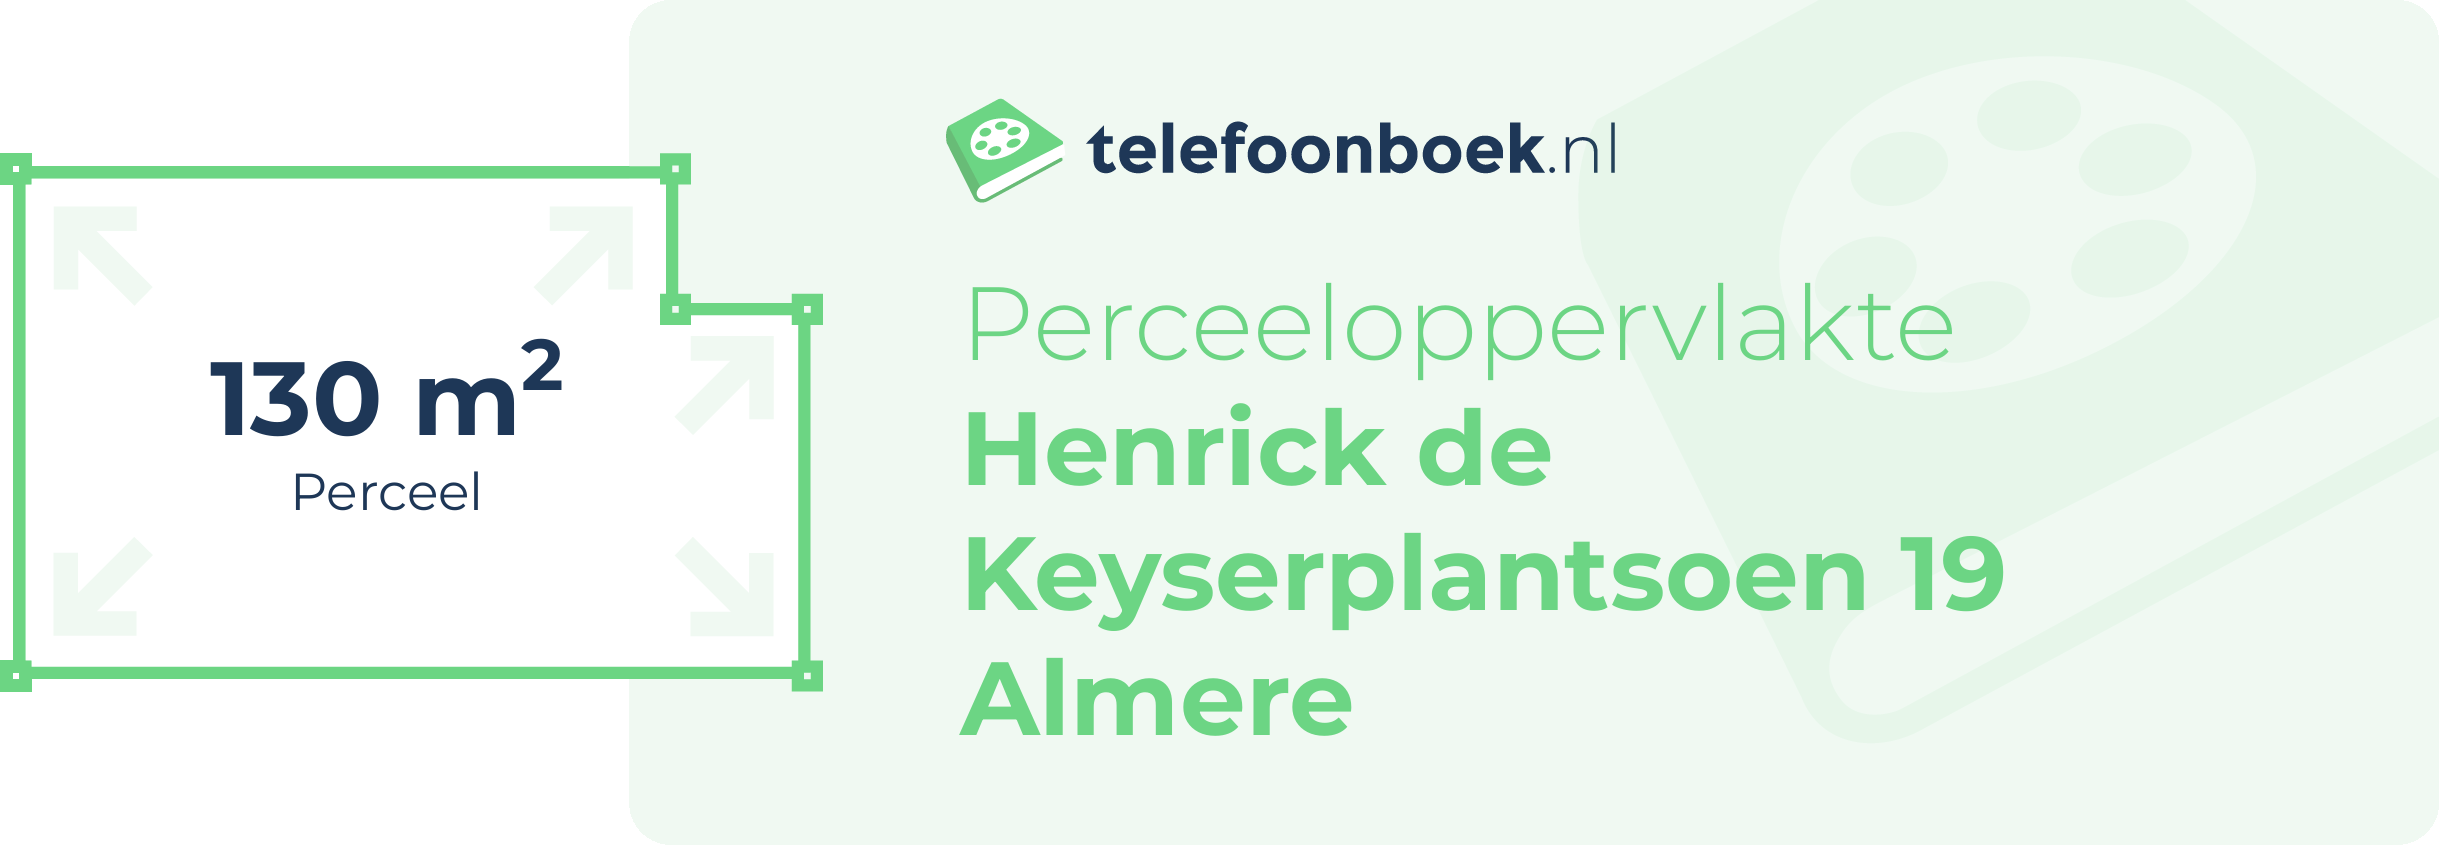 Perceeloppervlakte Henrick De Keyserplantsoen 19 Almere